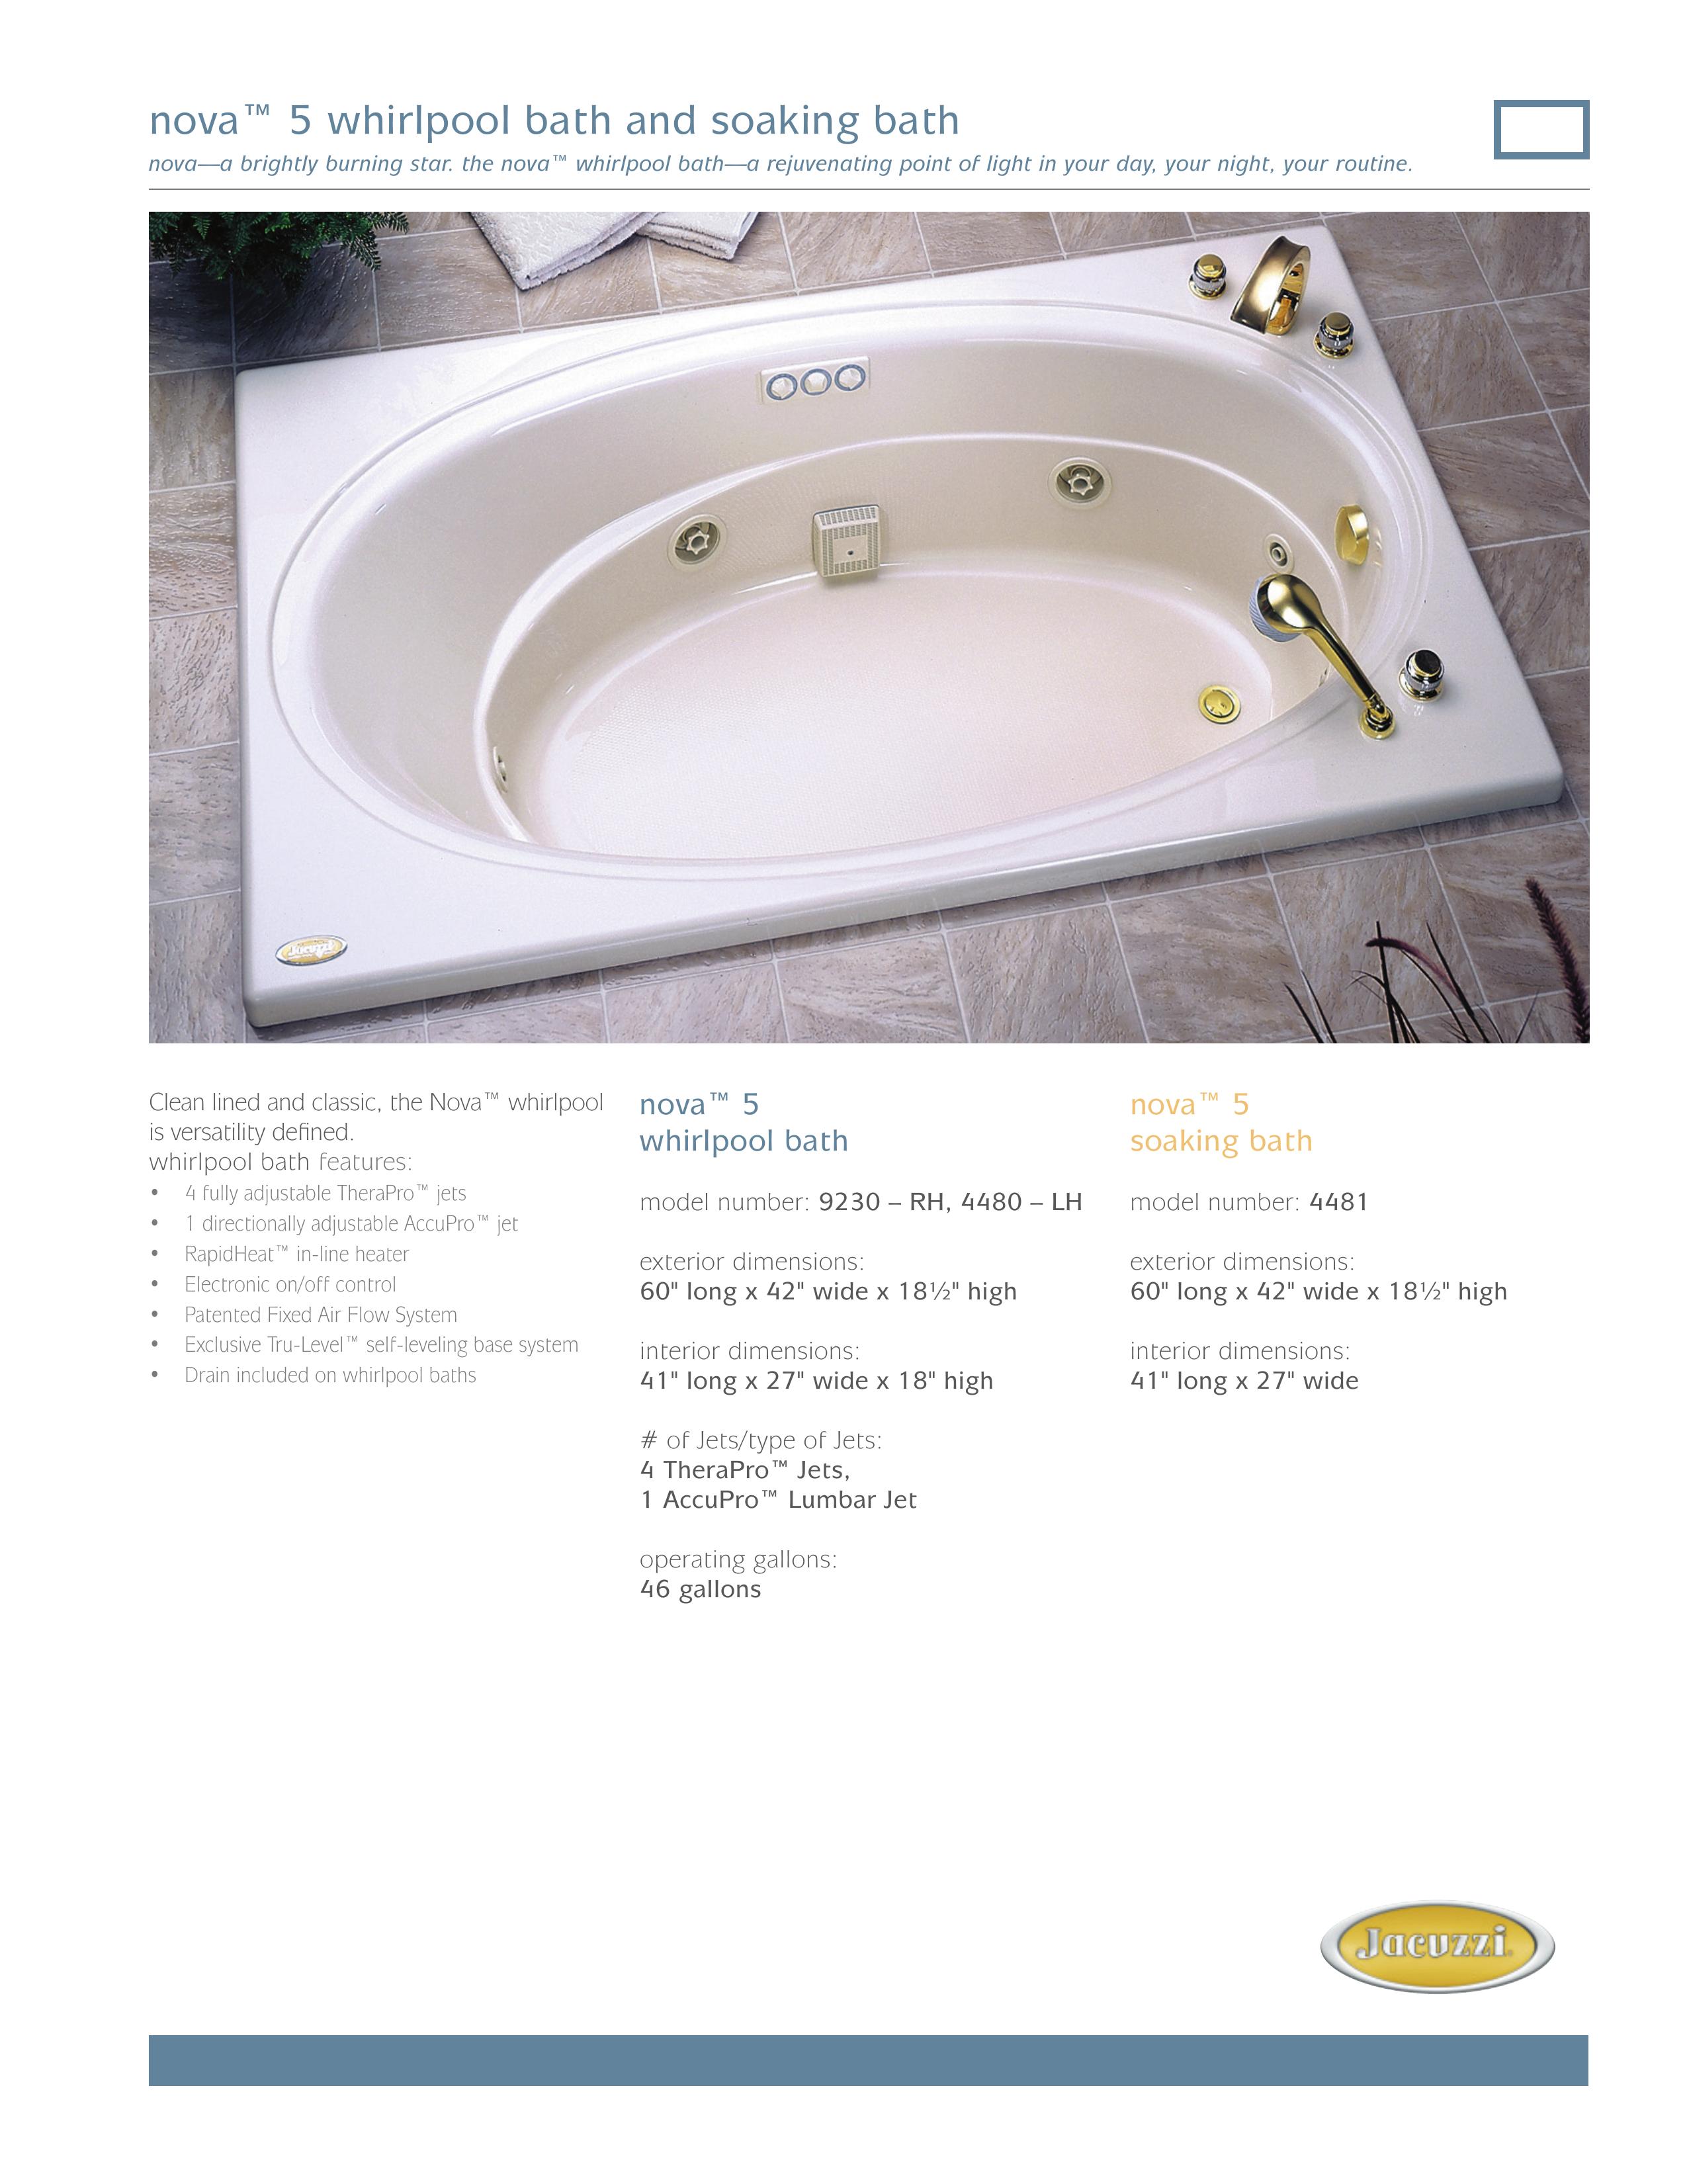 Jacuzzi 4480-LH Hot Tub User Manual